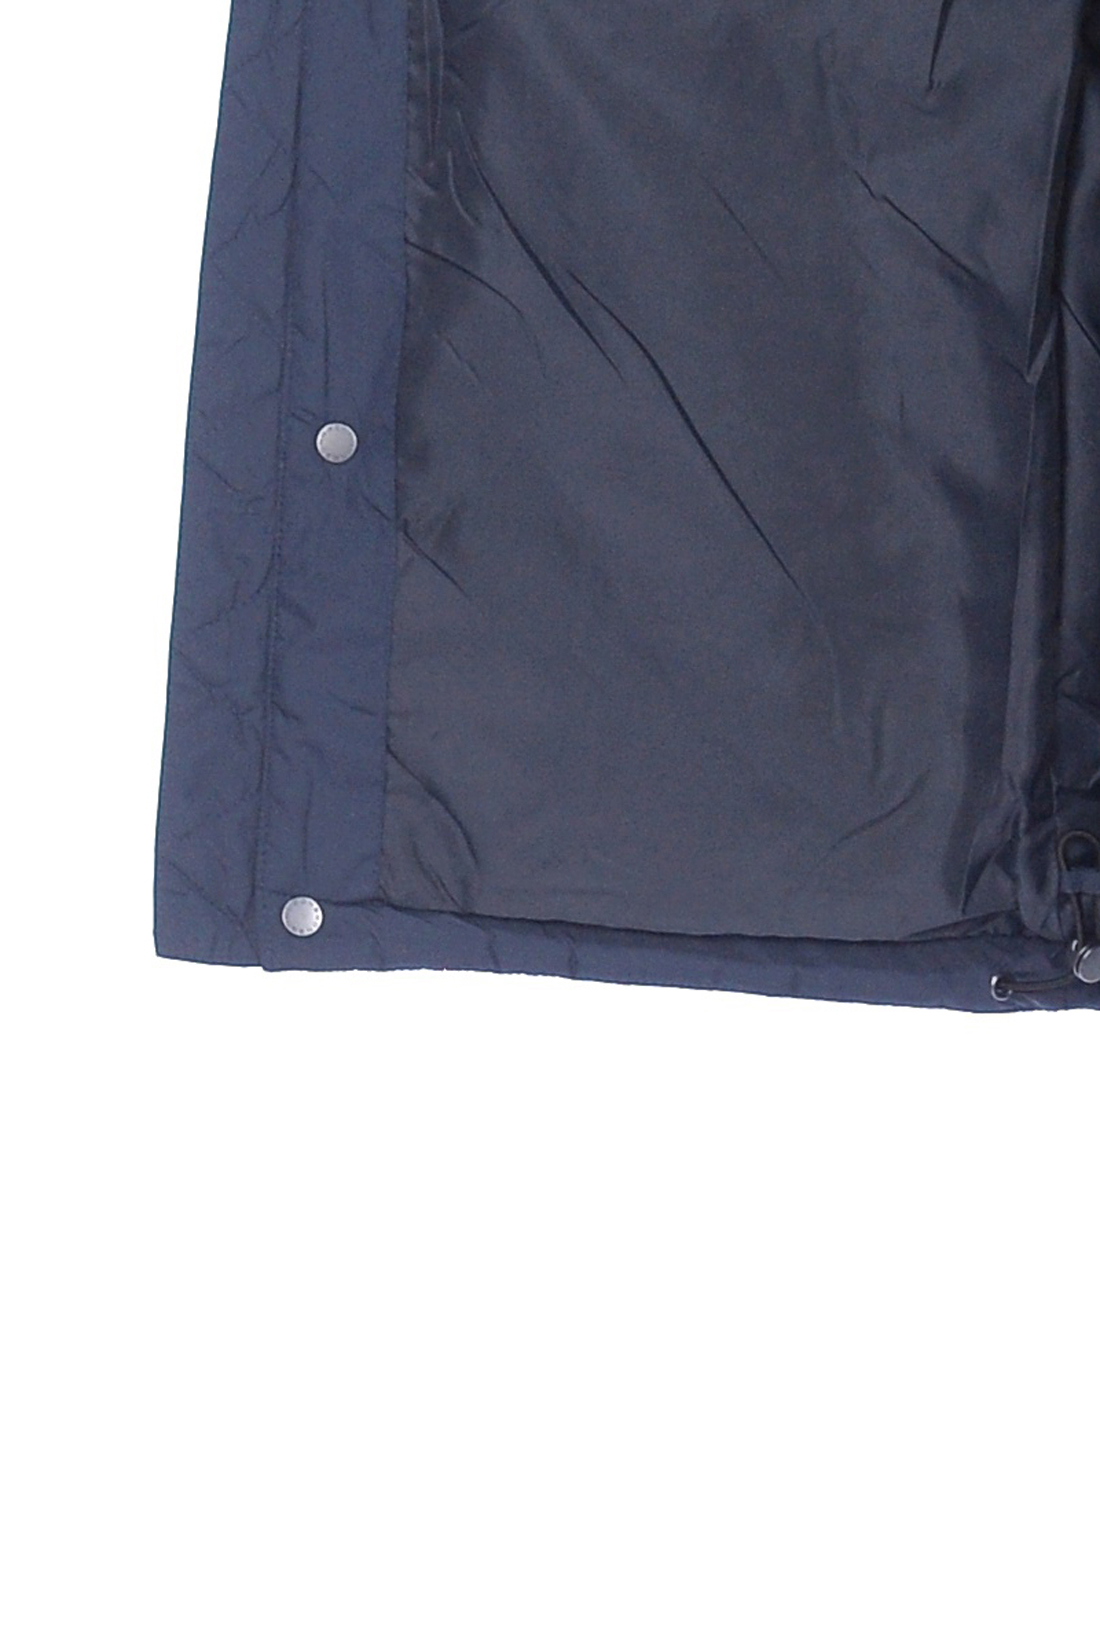 Стёганая куртка с капюшоном (арт. baon B539004), размер XXL, цвет синий Стёганая куртка с капюшоном (арт. baon B539004) - фото 4